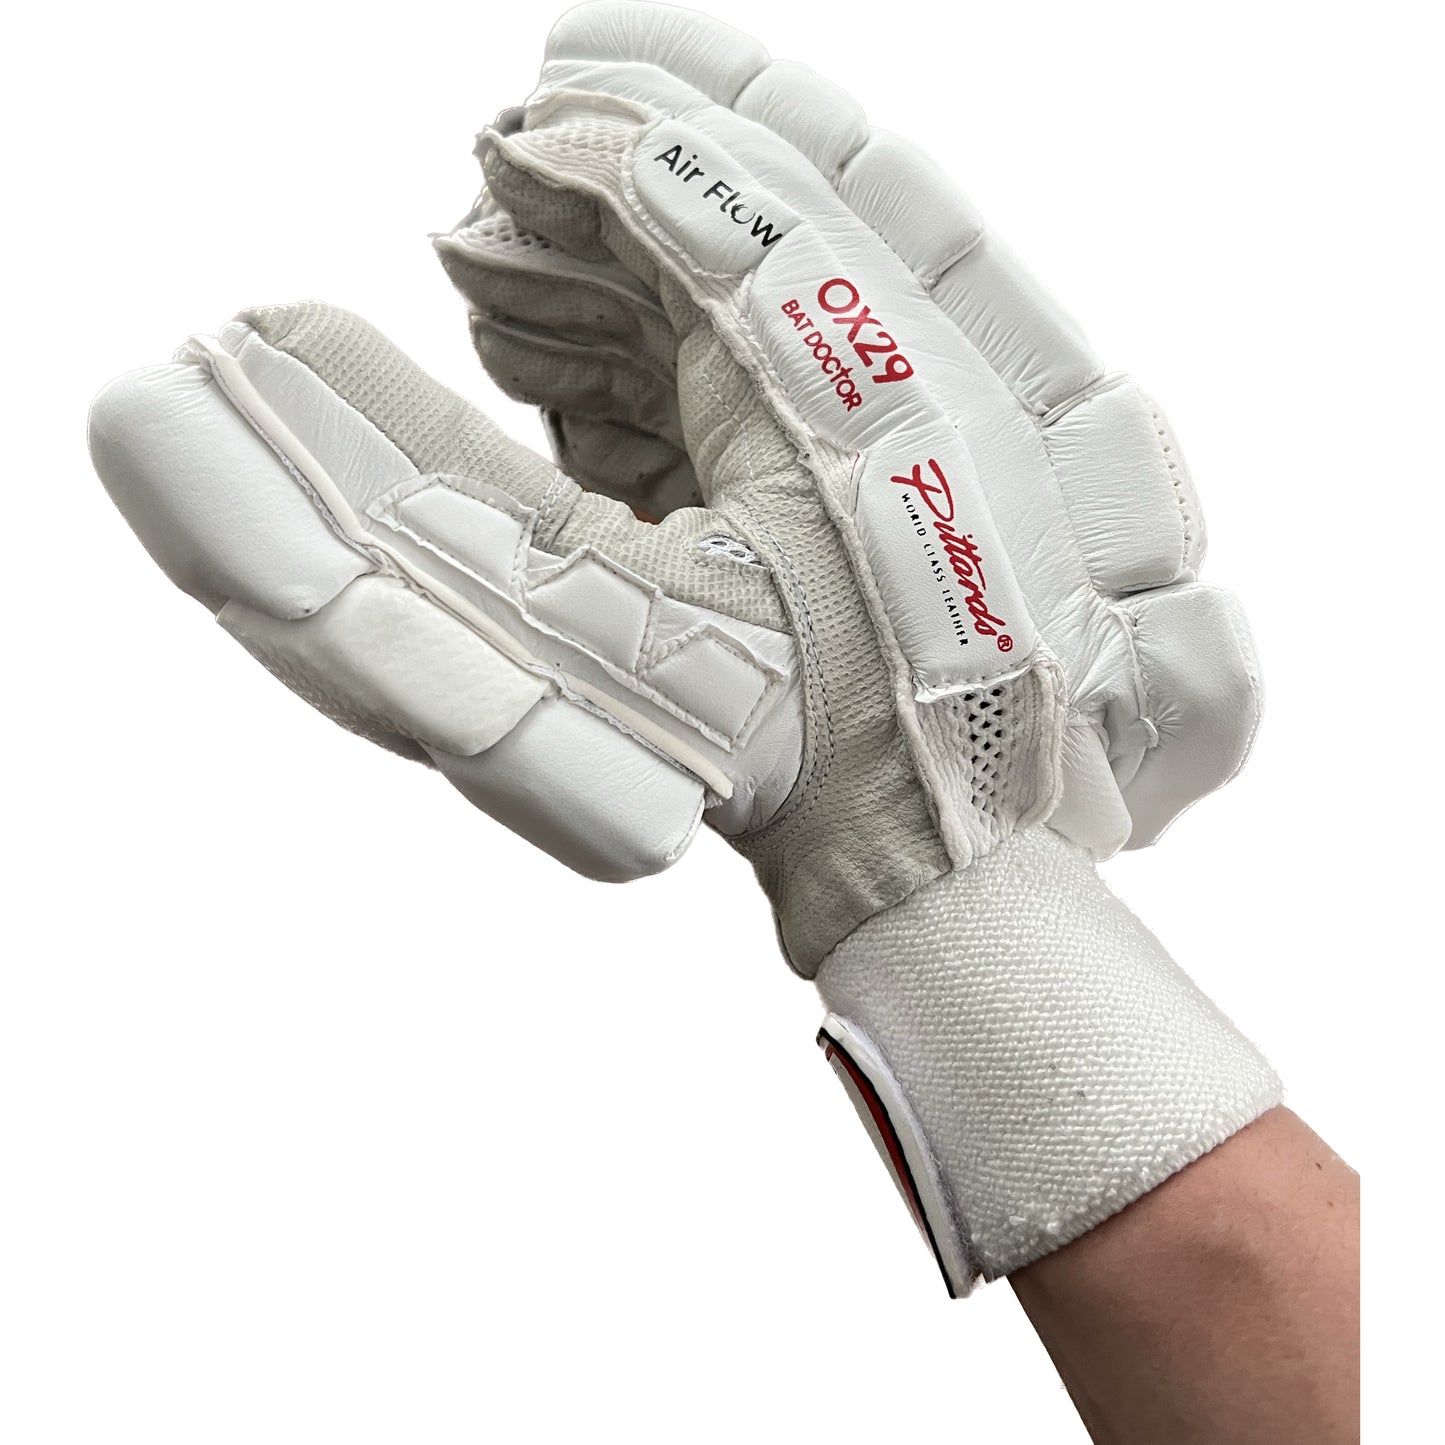 OX29 Senior Elite Batting Gloves, Pittards Leather & Air Flow Technology